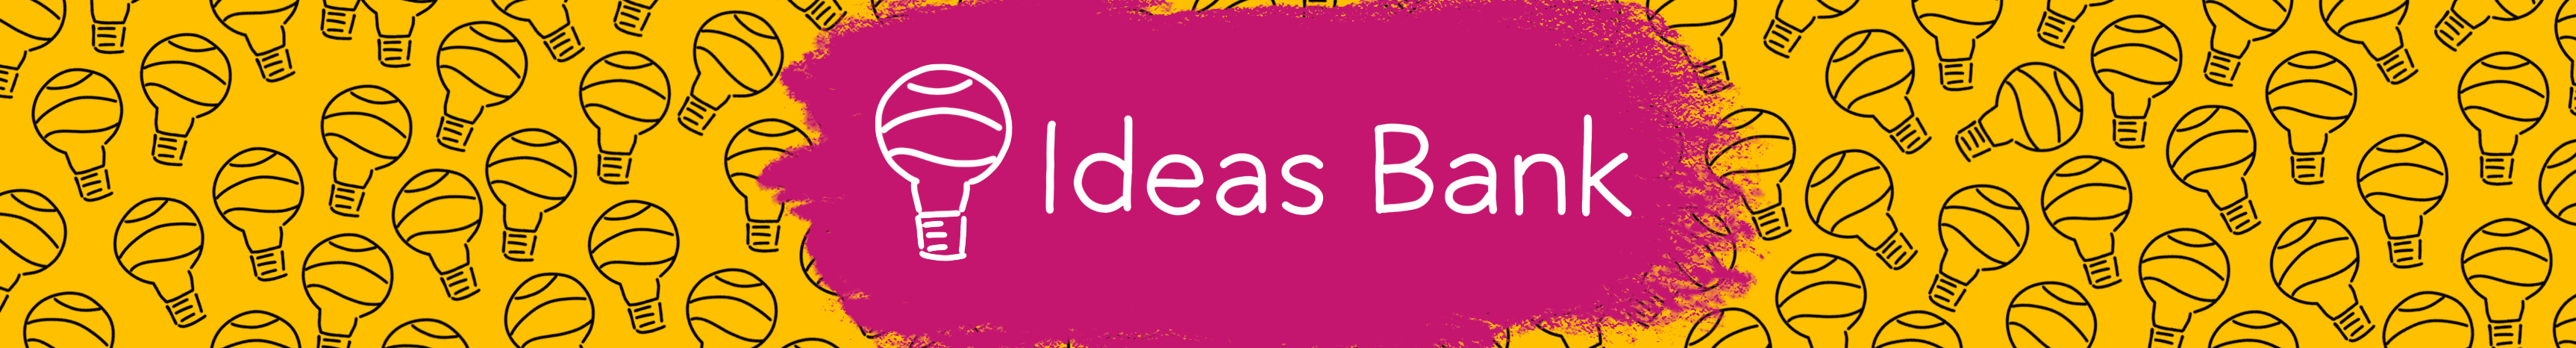 Ideas bank banner with light bulbs